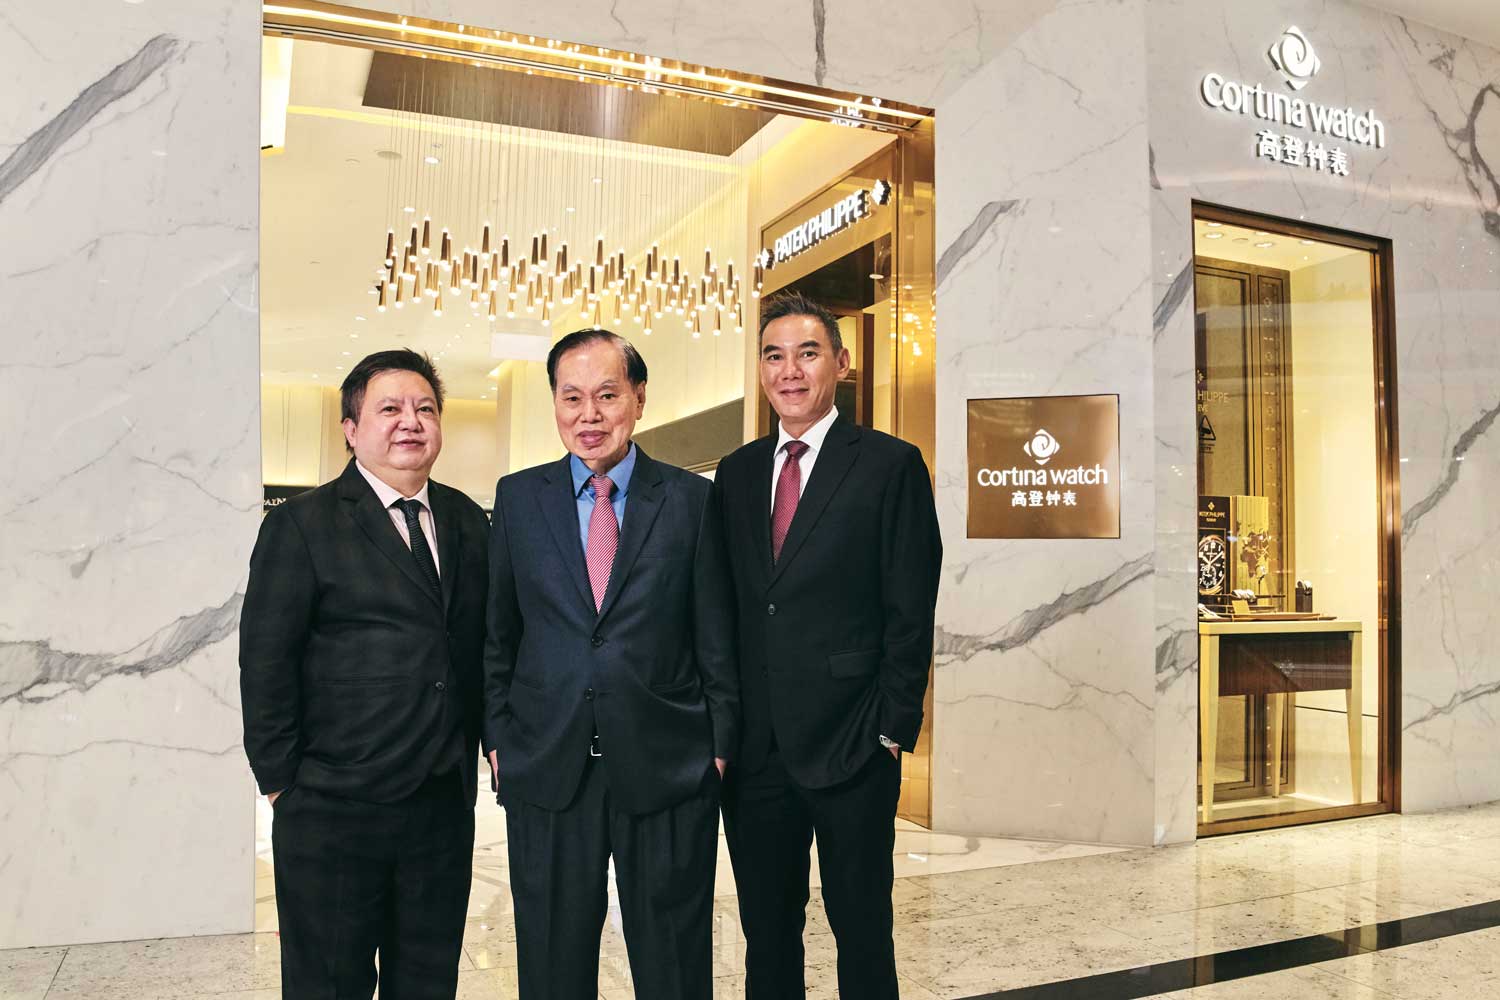 Raymond Lim, Anthony Lim and Jeremy Lim